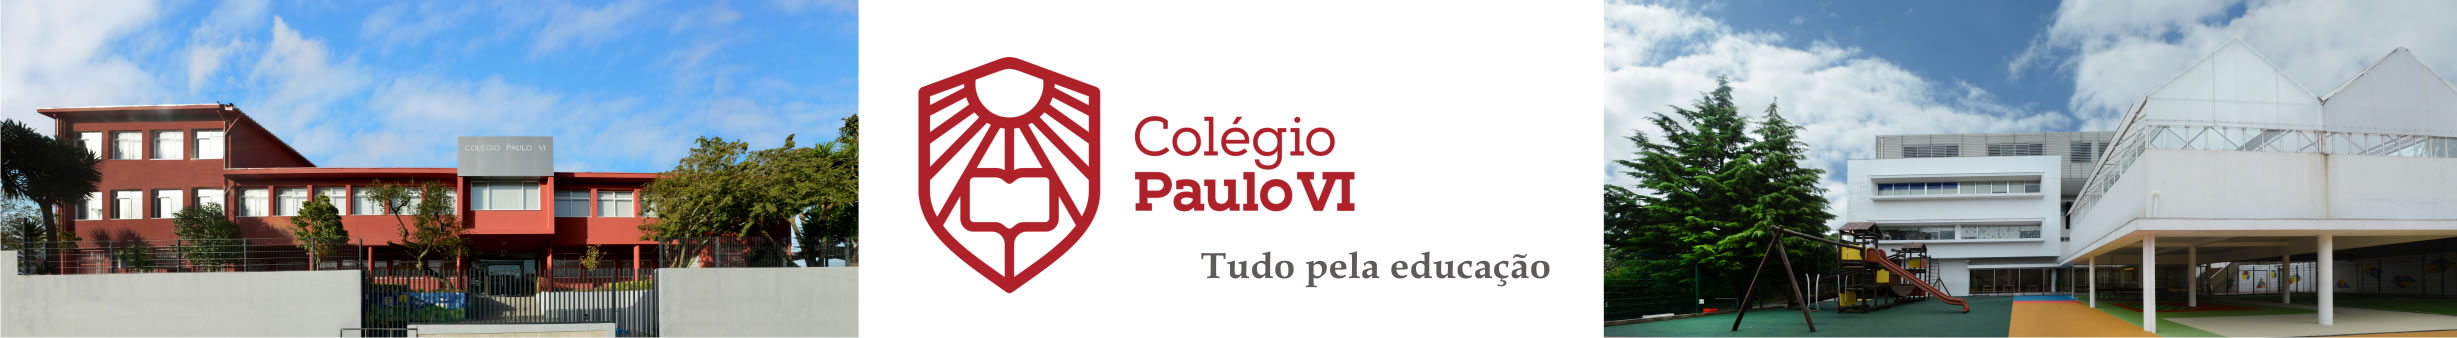 Colégio Paulo VI